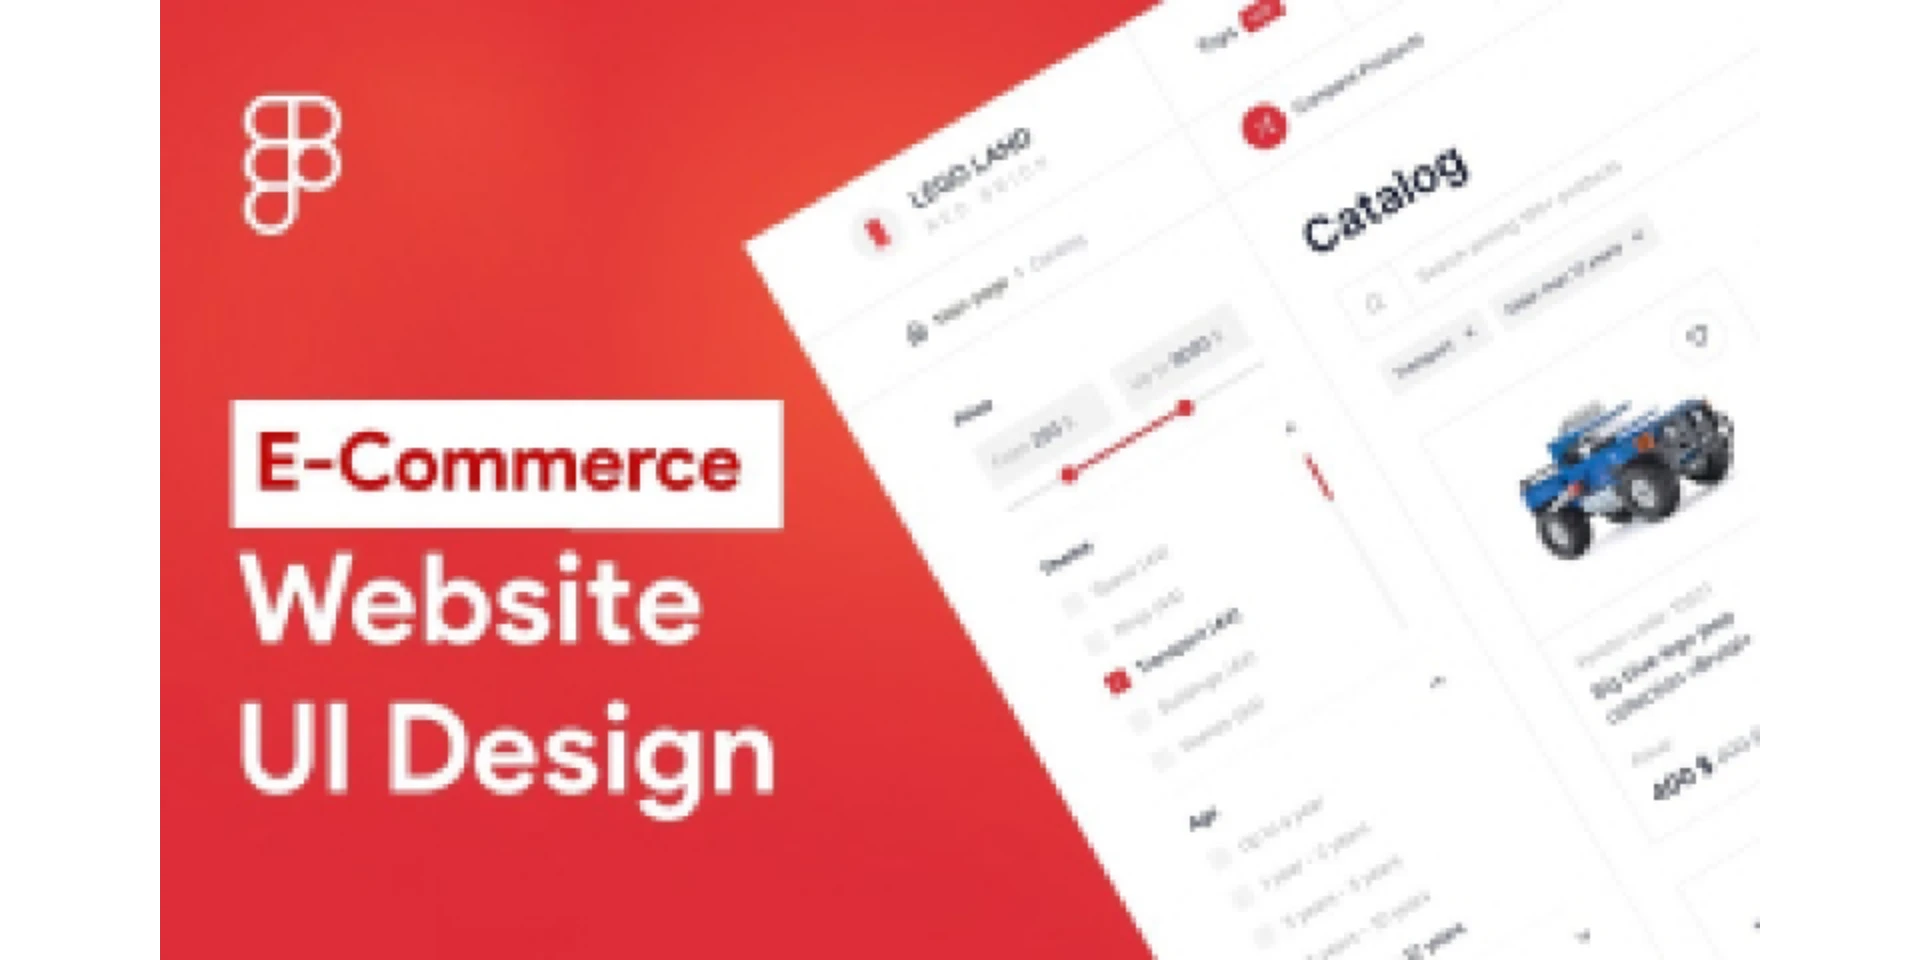 E Commerce Website UI Design for Figma and Adobe XD